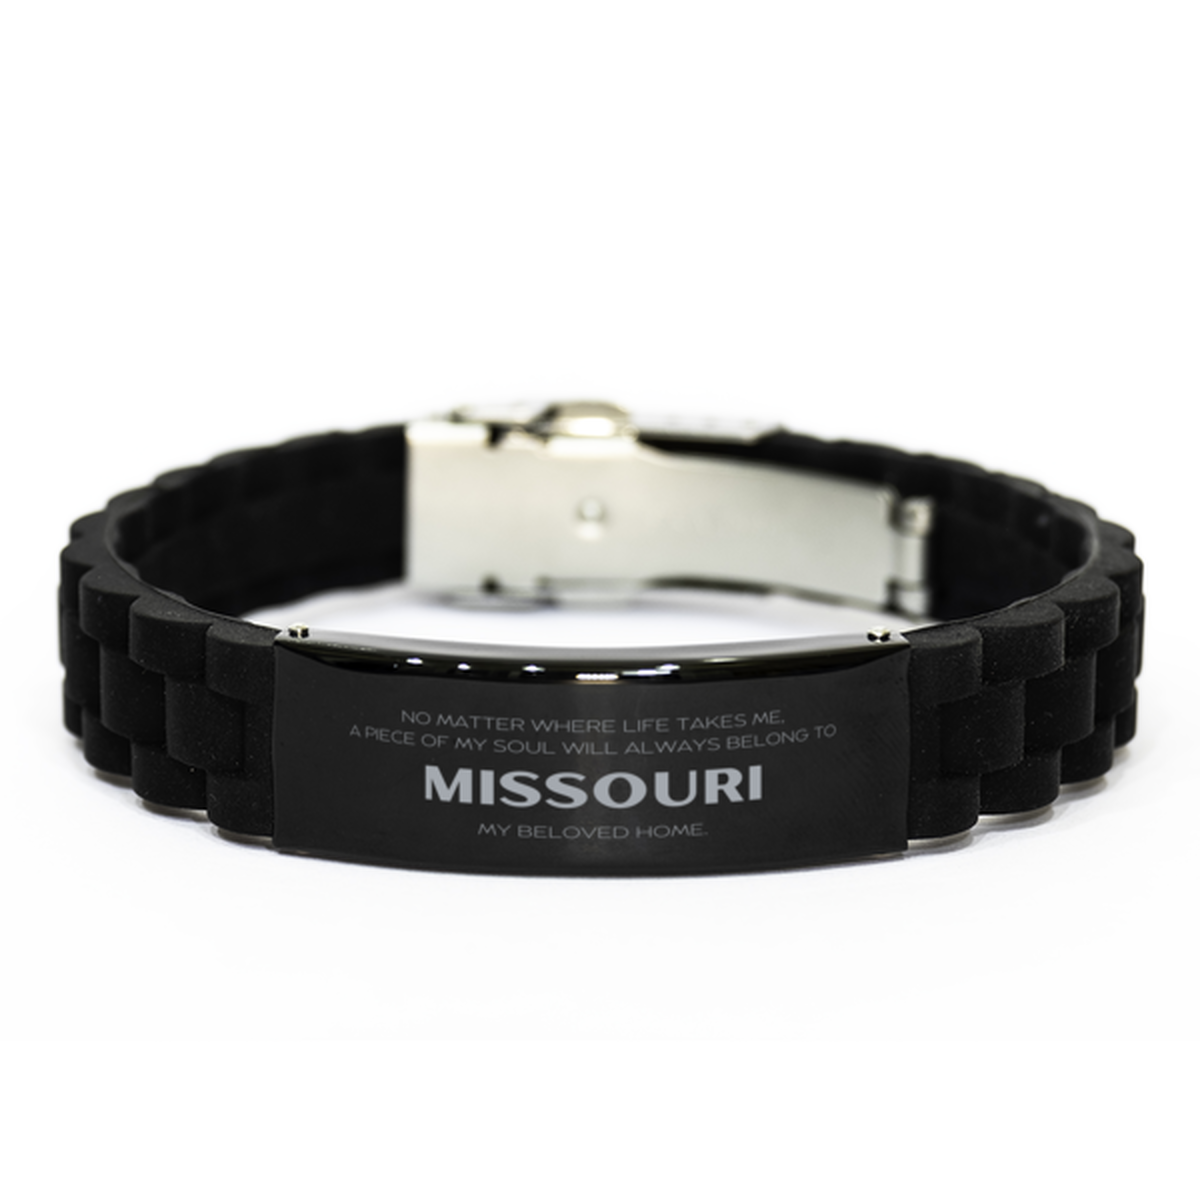 Love Missouri State Gifts, My soul will always belong to Missouri, Proud Black Glidelock Clasp Bracelet, Birthday Unique Gifts For Missouri Men, Women, Friends